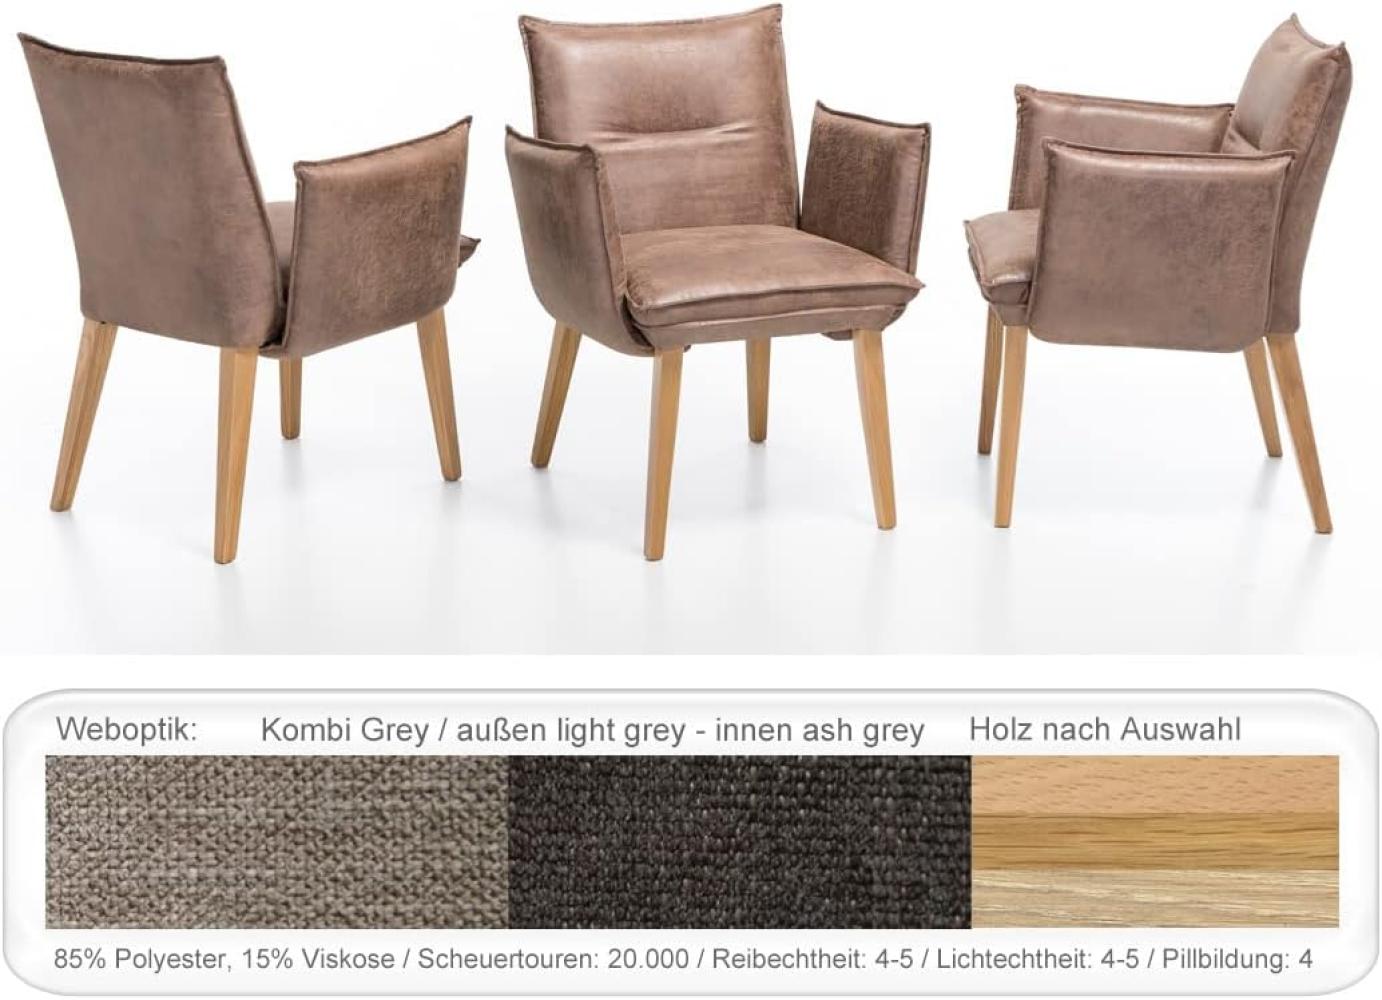 6x Sessel Gerit 2 Rücken mit Naht Polstersessel Esszimmer Massivholz Buche natur lackiert, Kombi Fleckless Grey Bild 1